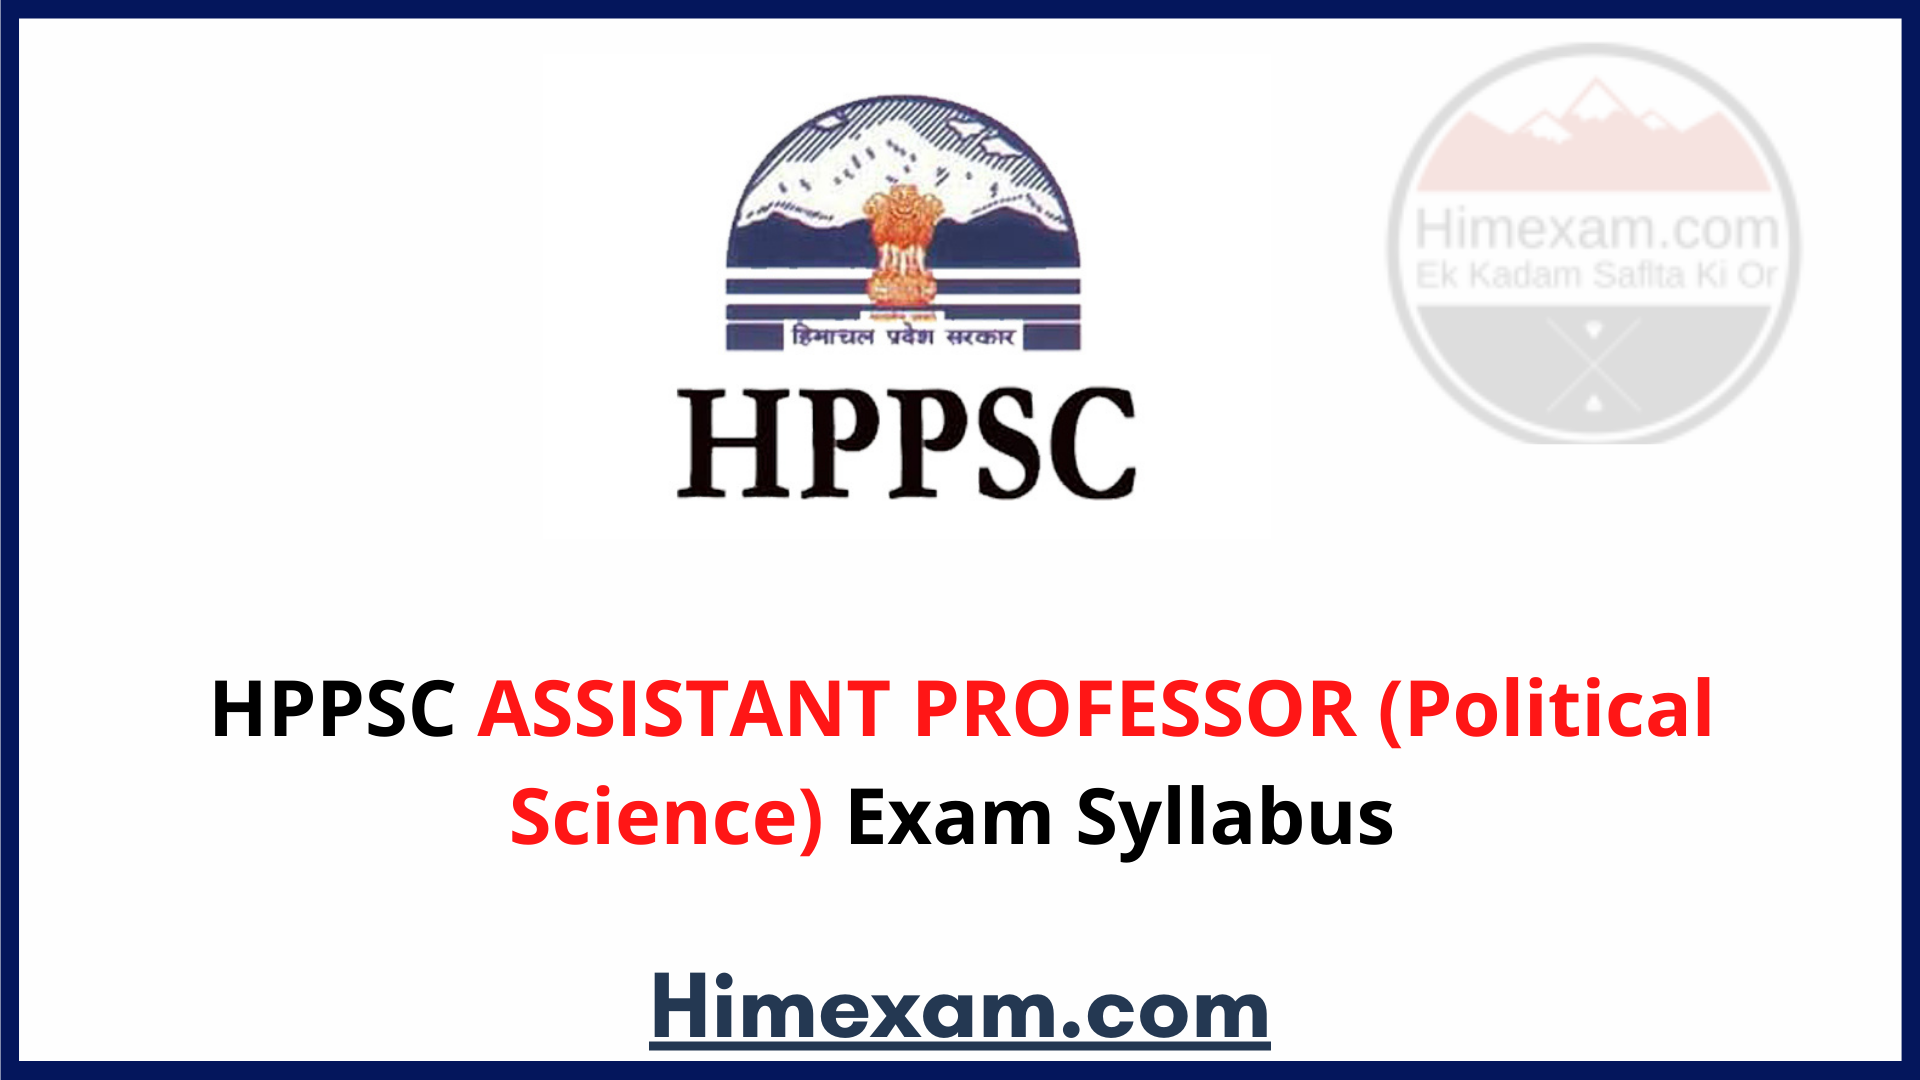 HPPSC ASSISTANT PROFESSOR (Political Science) Exam Syllabus